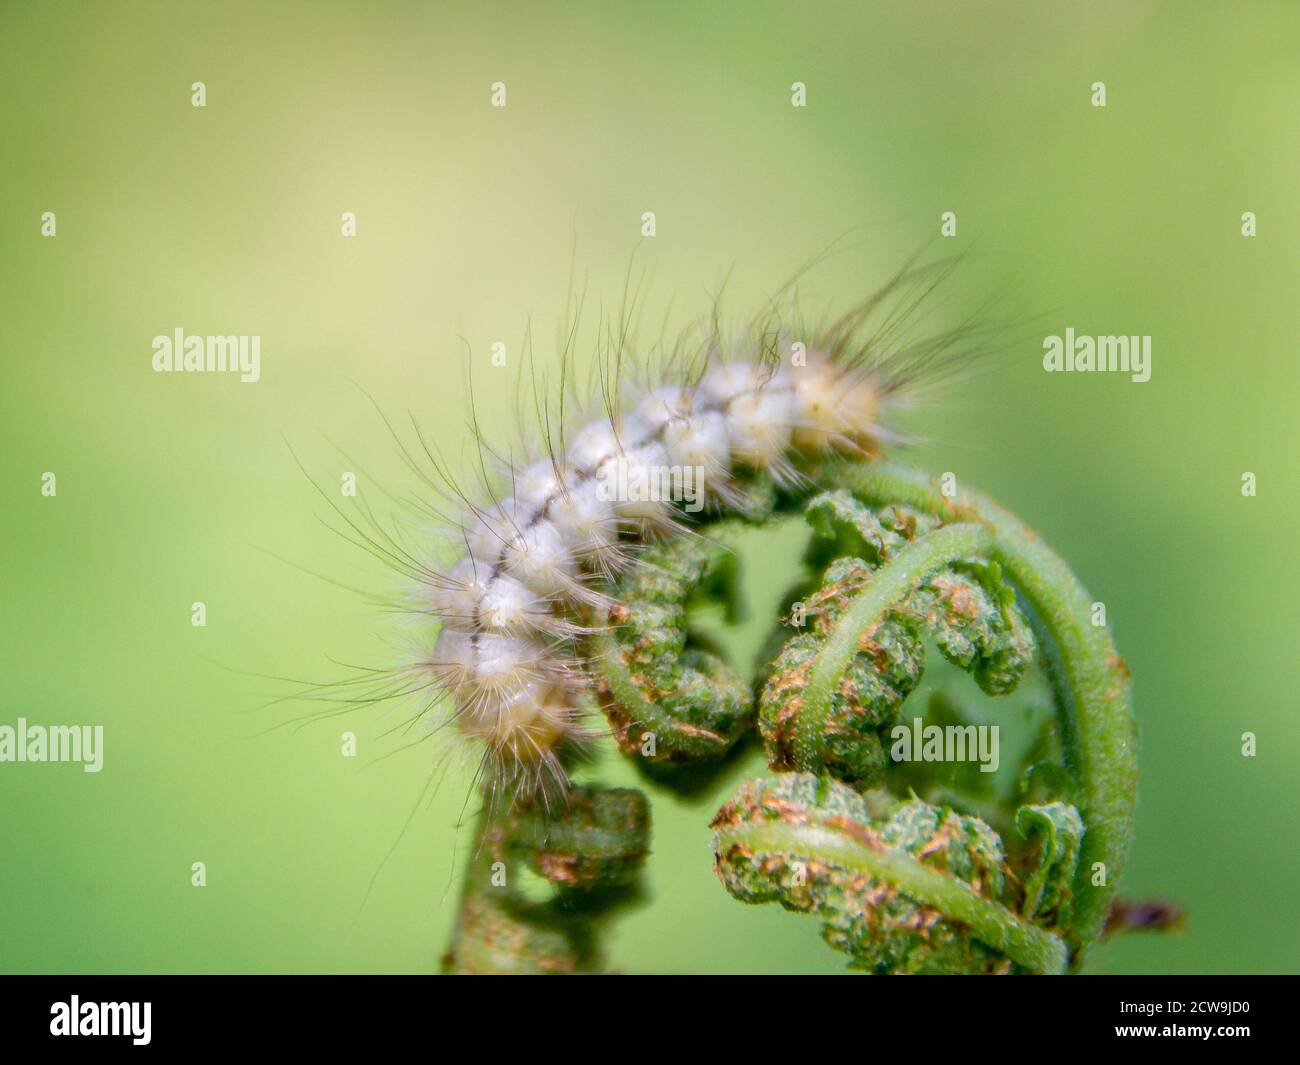 light hairy caterpillar with dark longitudinal stripes on young shoots of bracken fern, selective focus Stock Photo